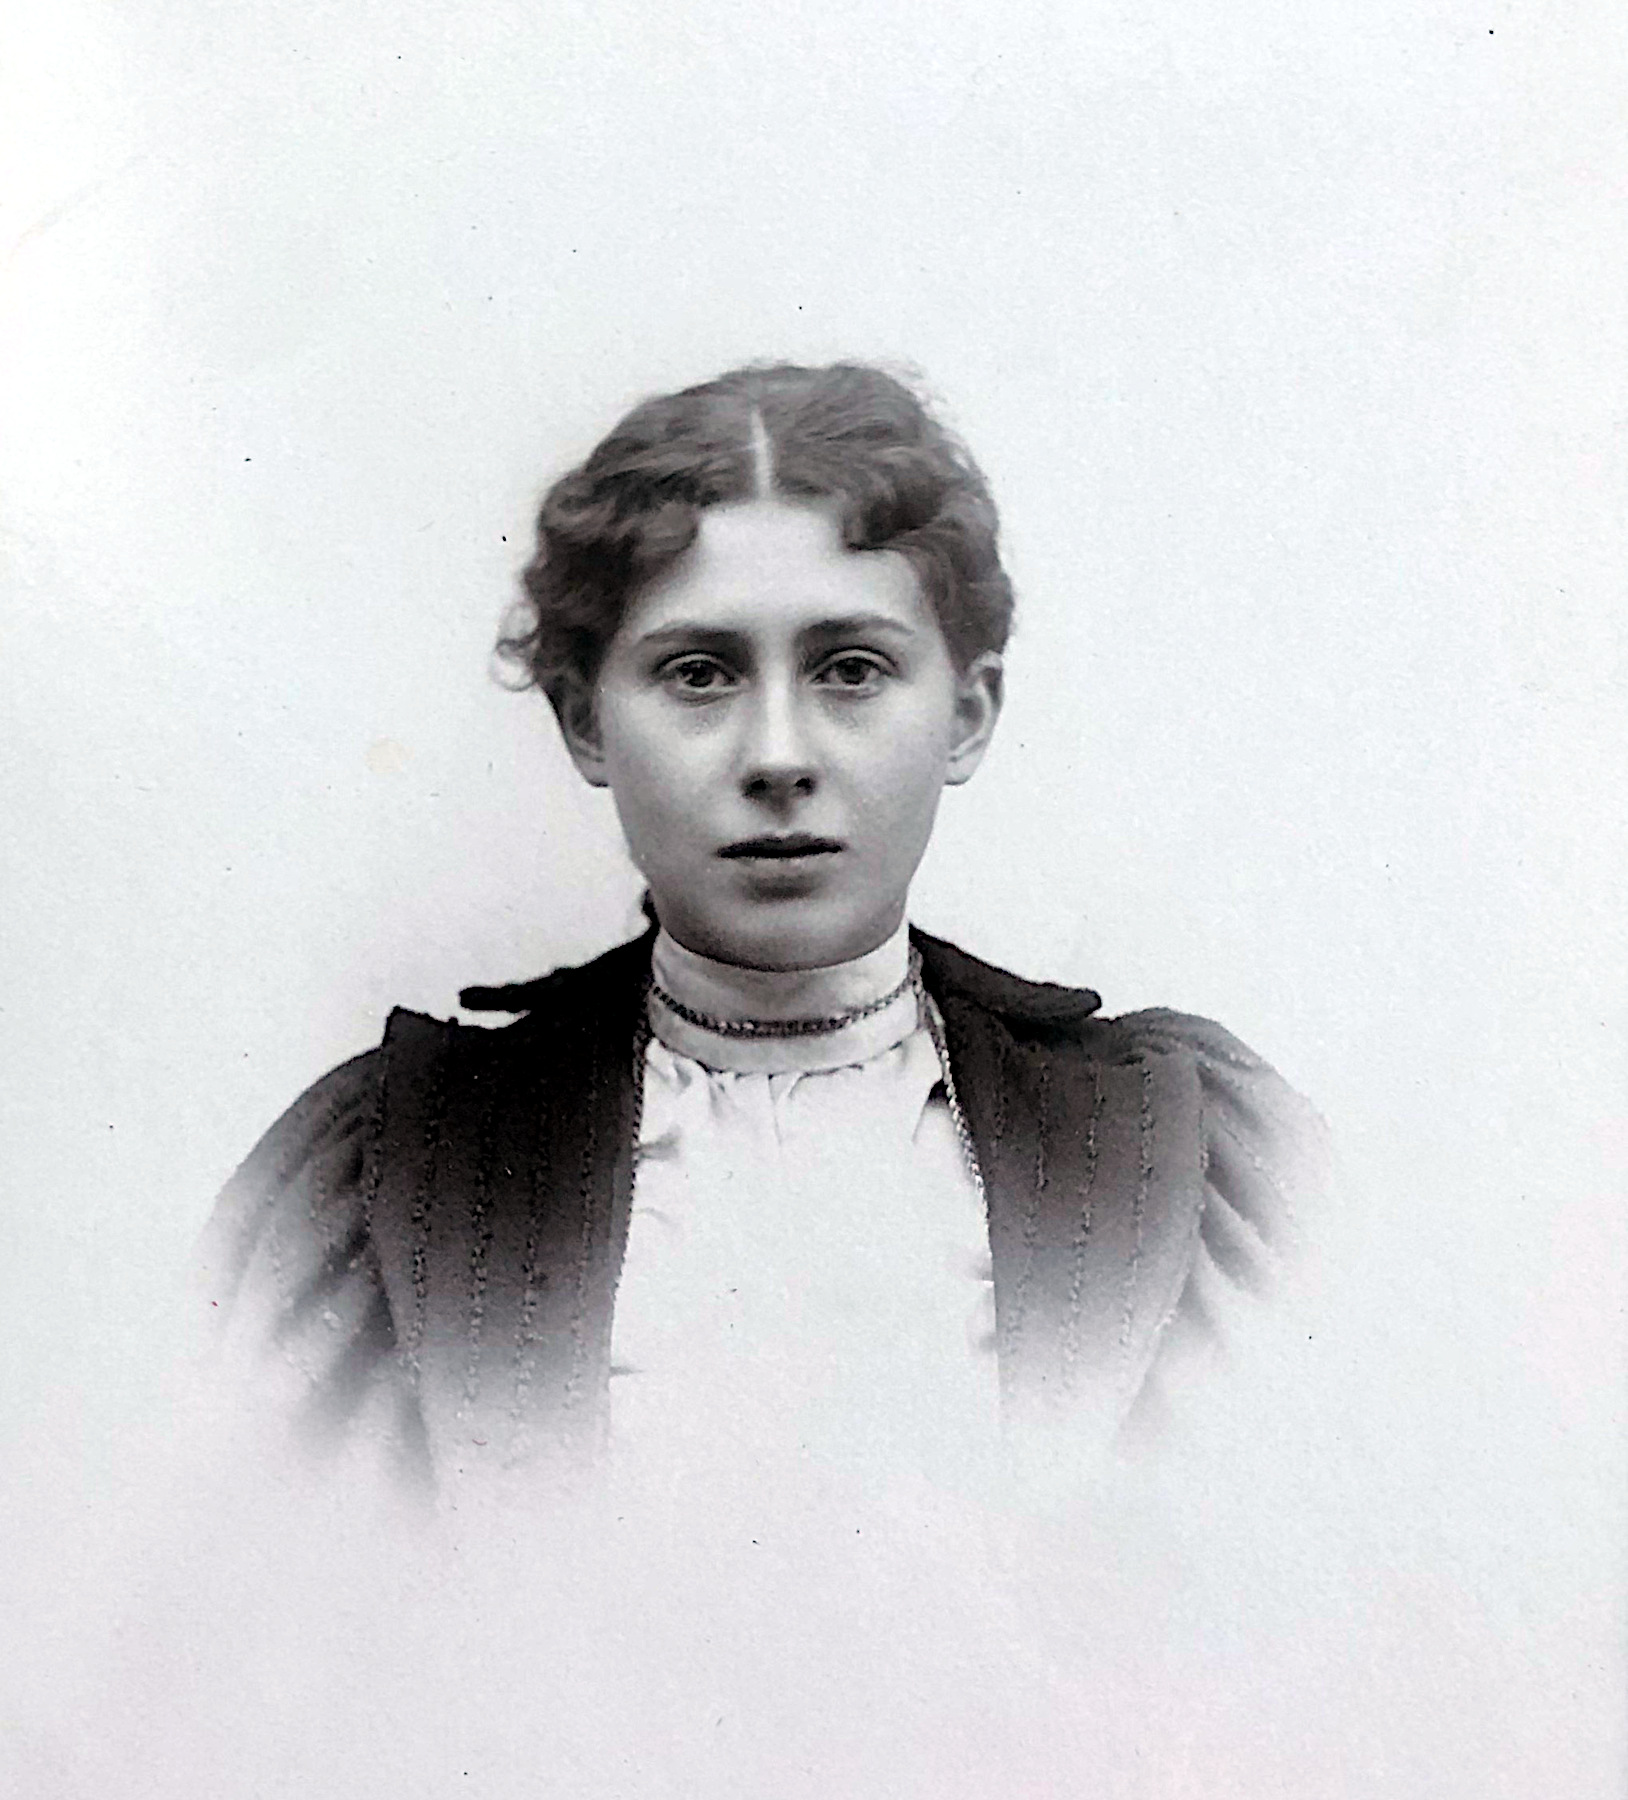 Generation 3. Olive Stockdale (1881-1916).